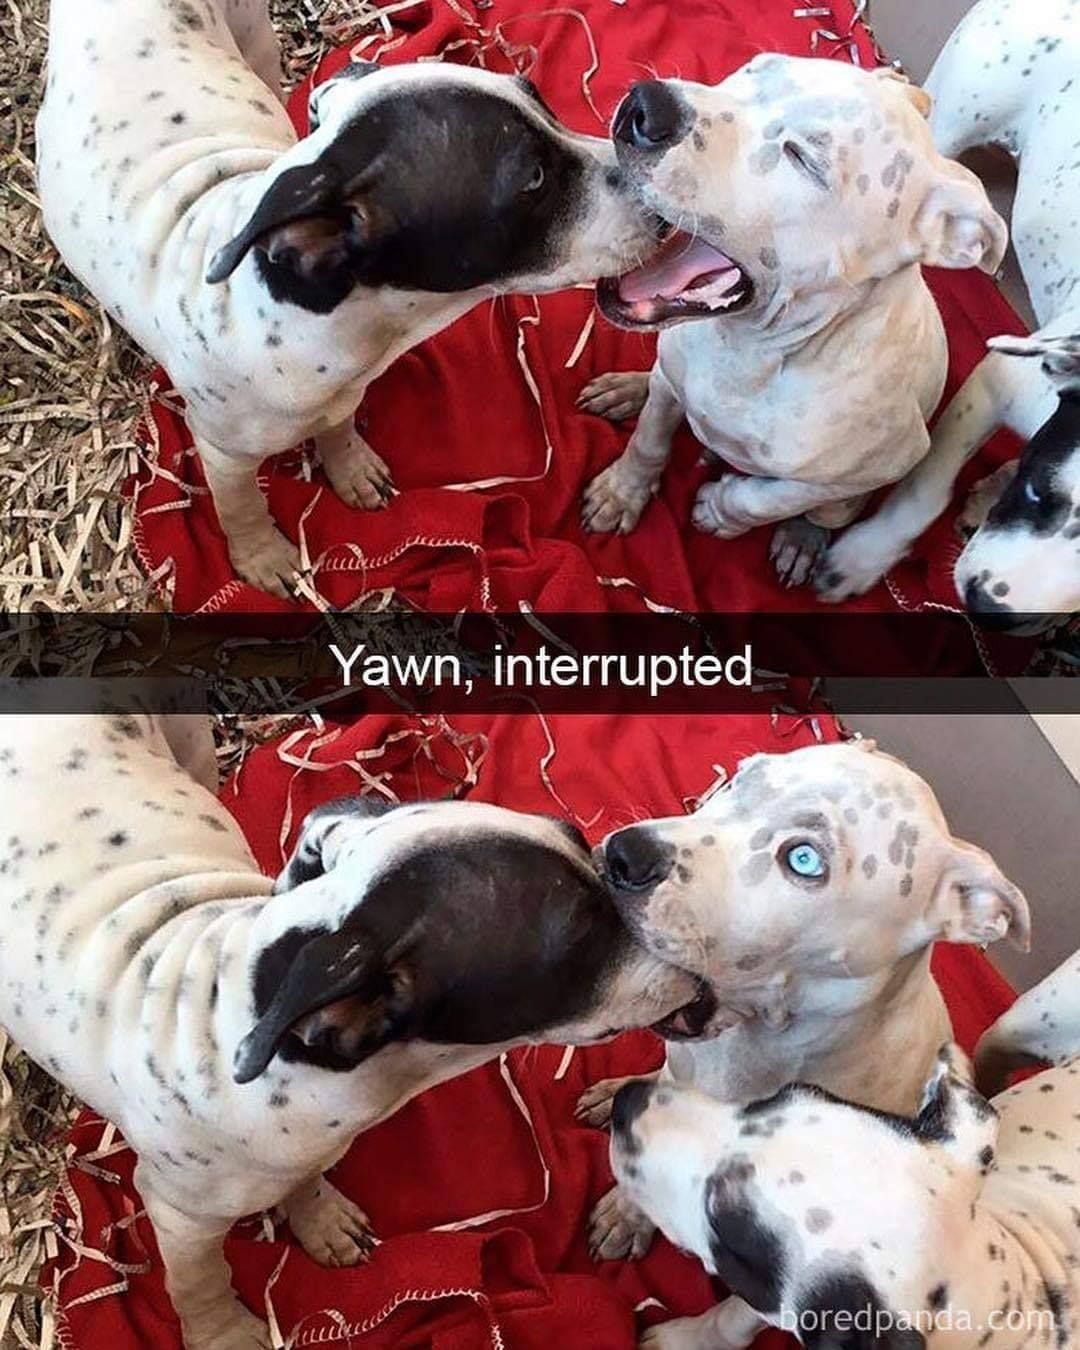 Yawn, interrupted